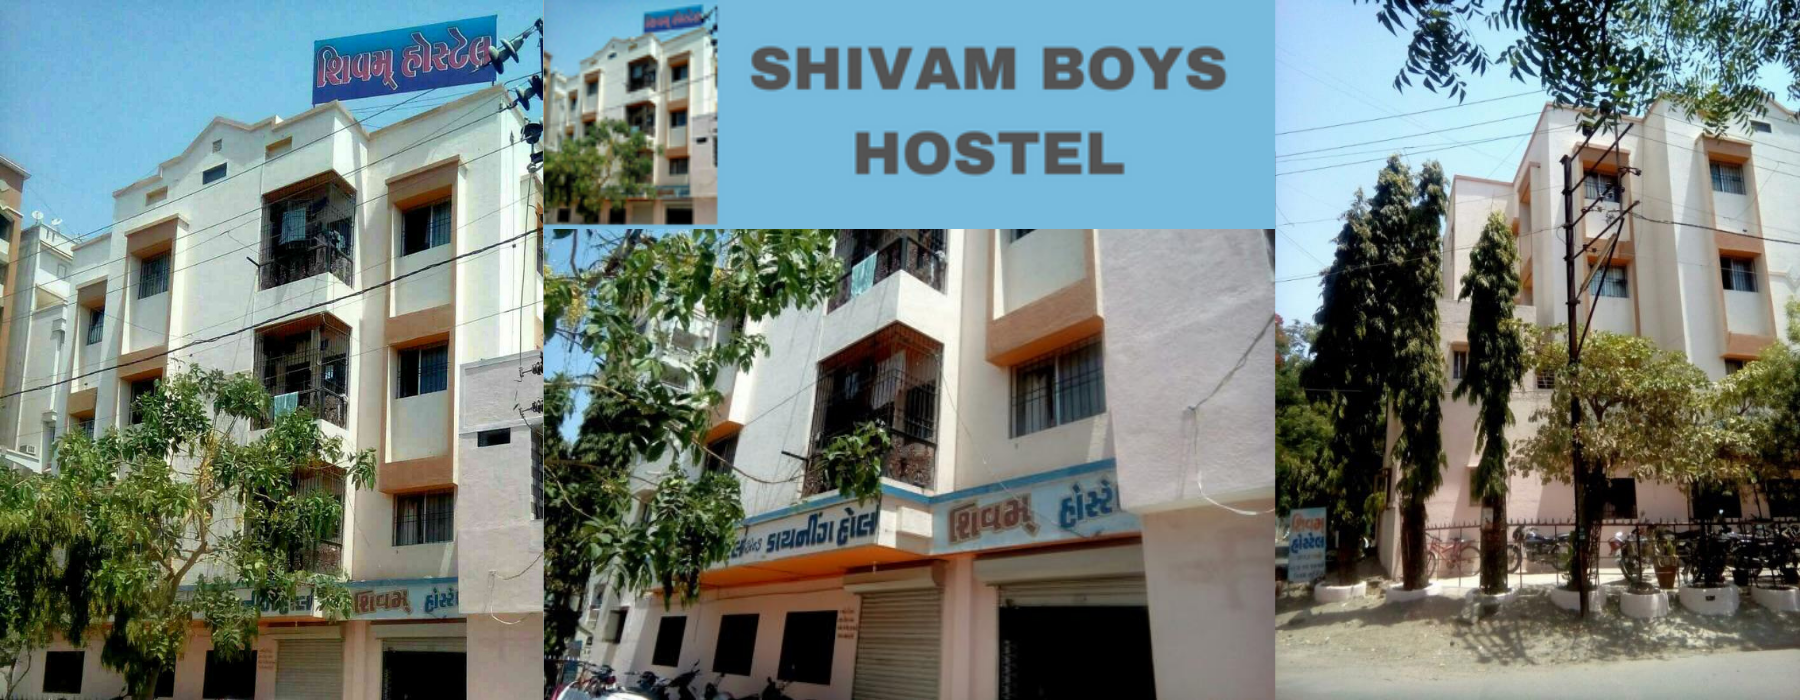 Hostel for Boy Students in Rajkot